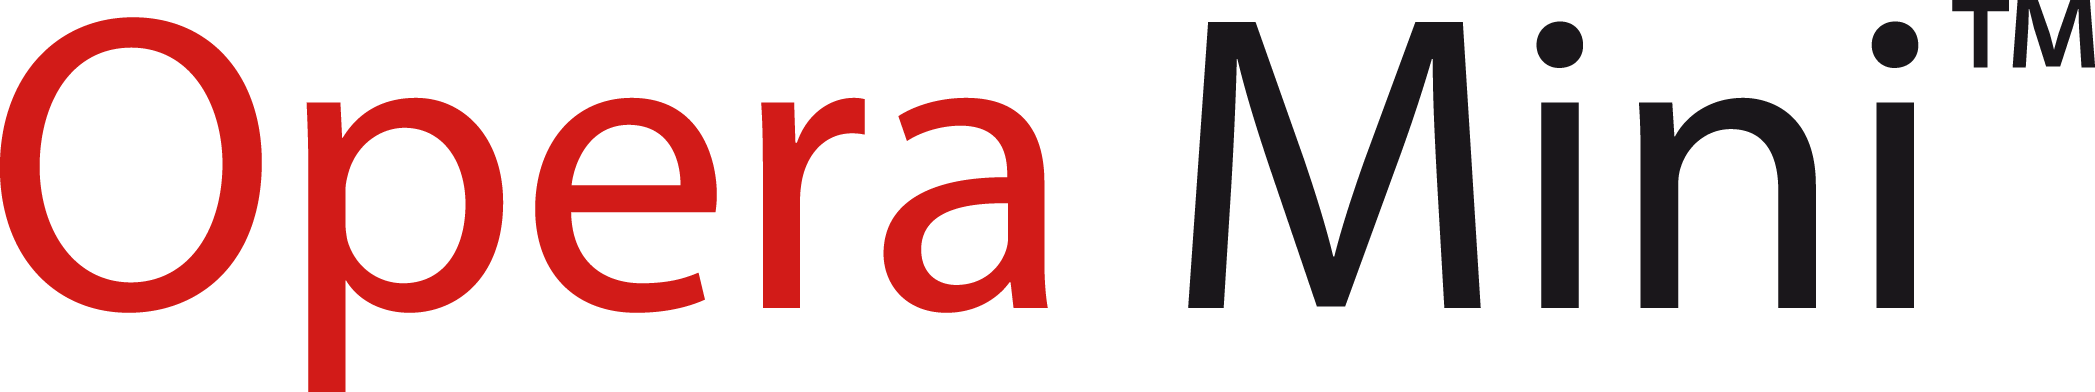 Opera Mini logo 3